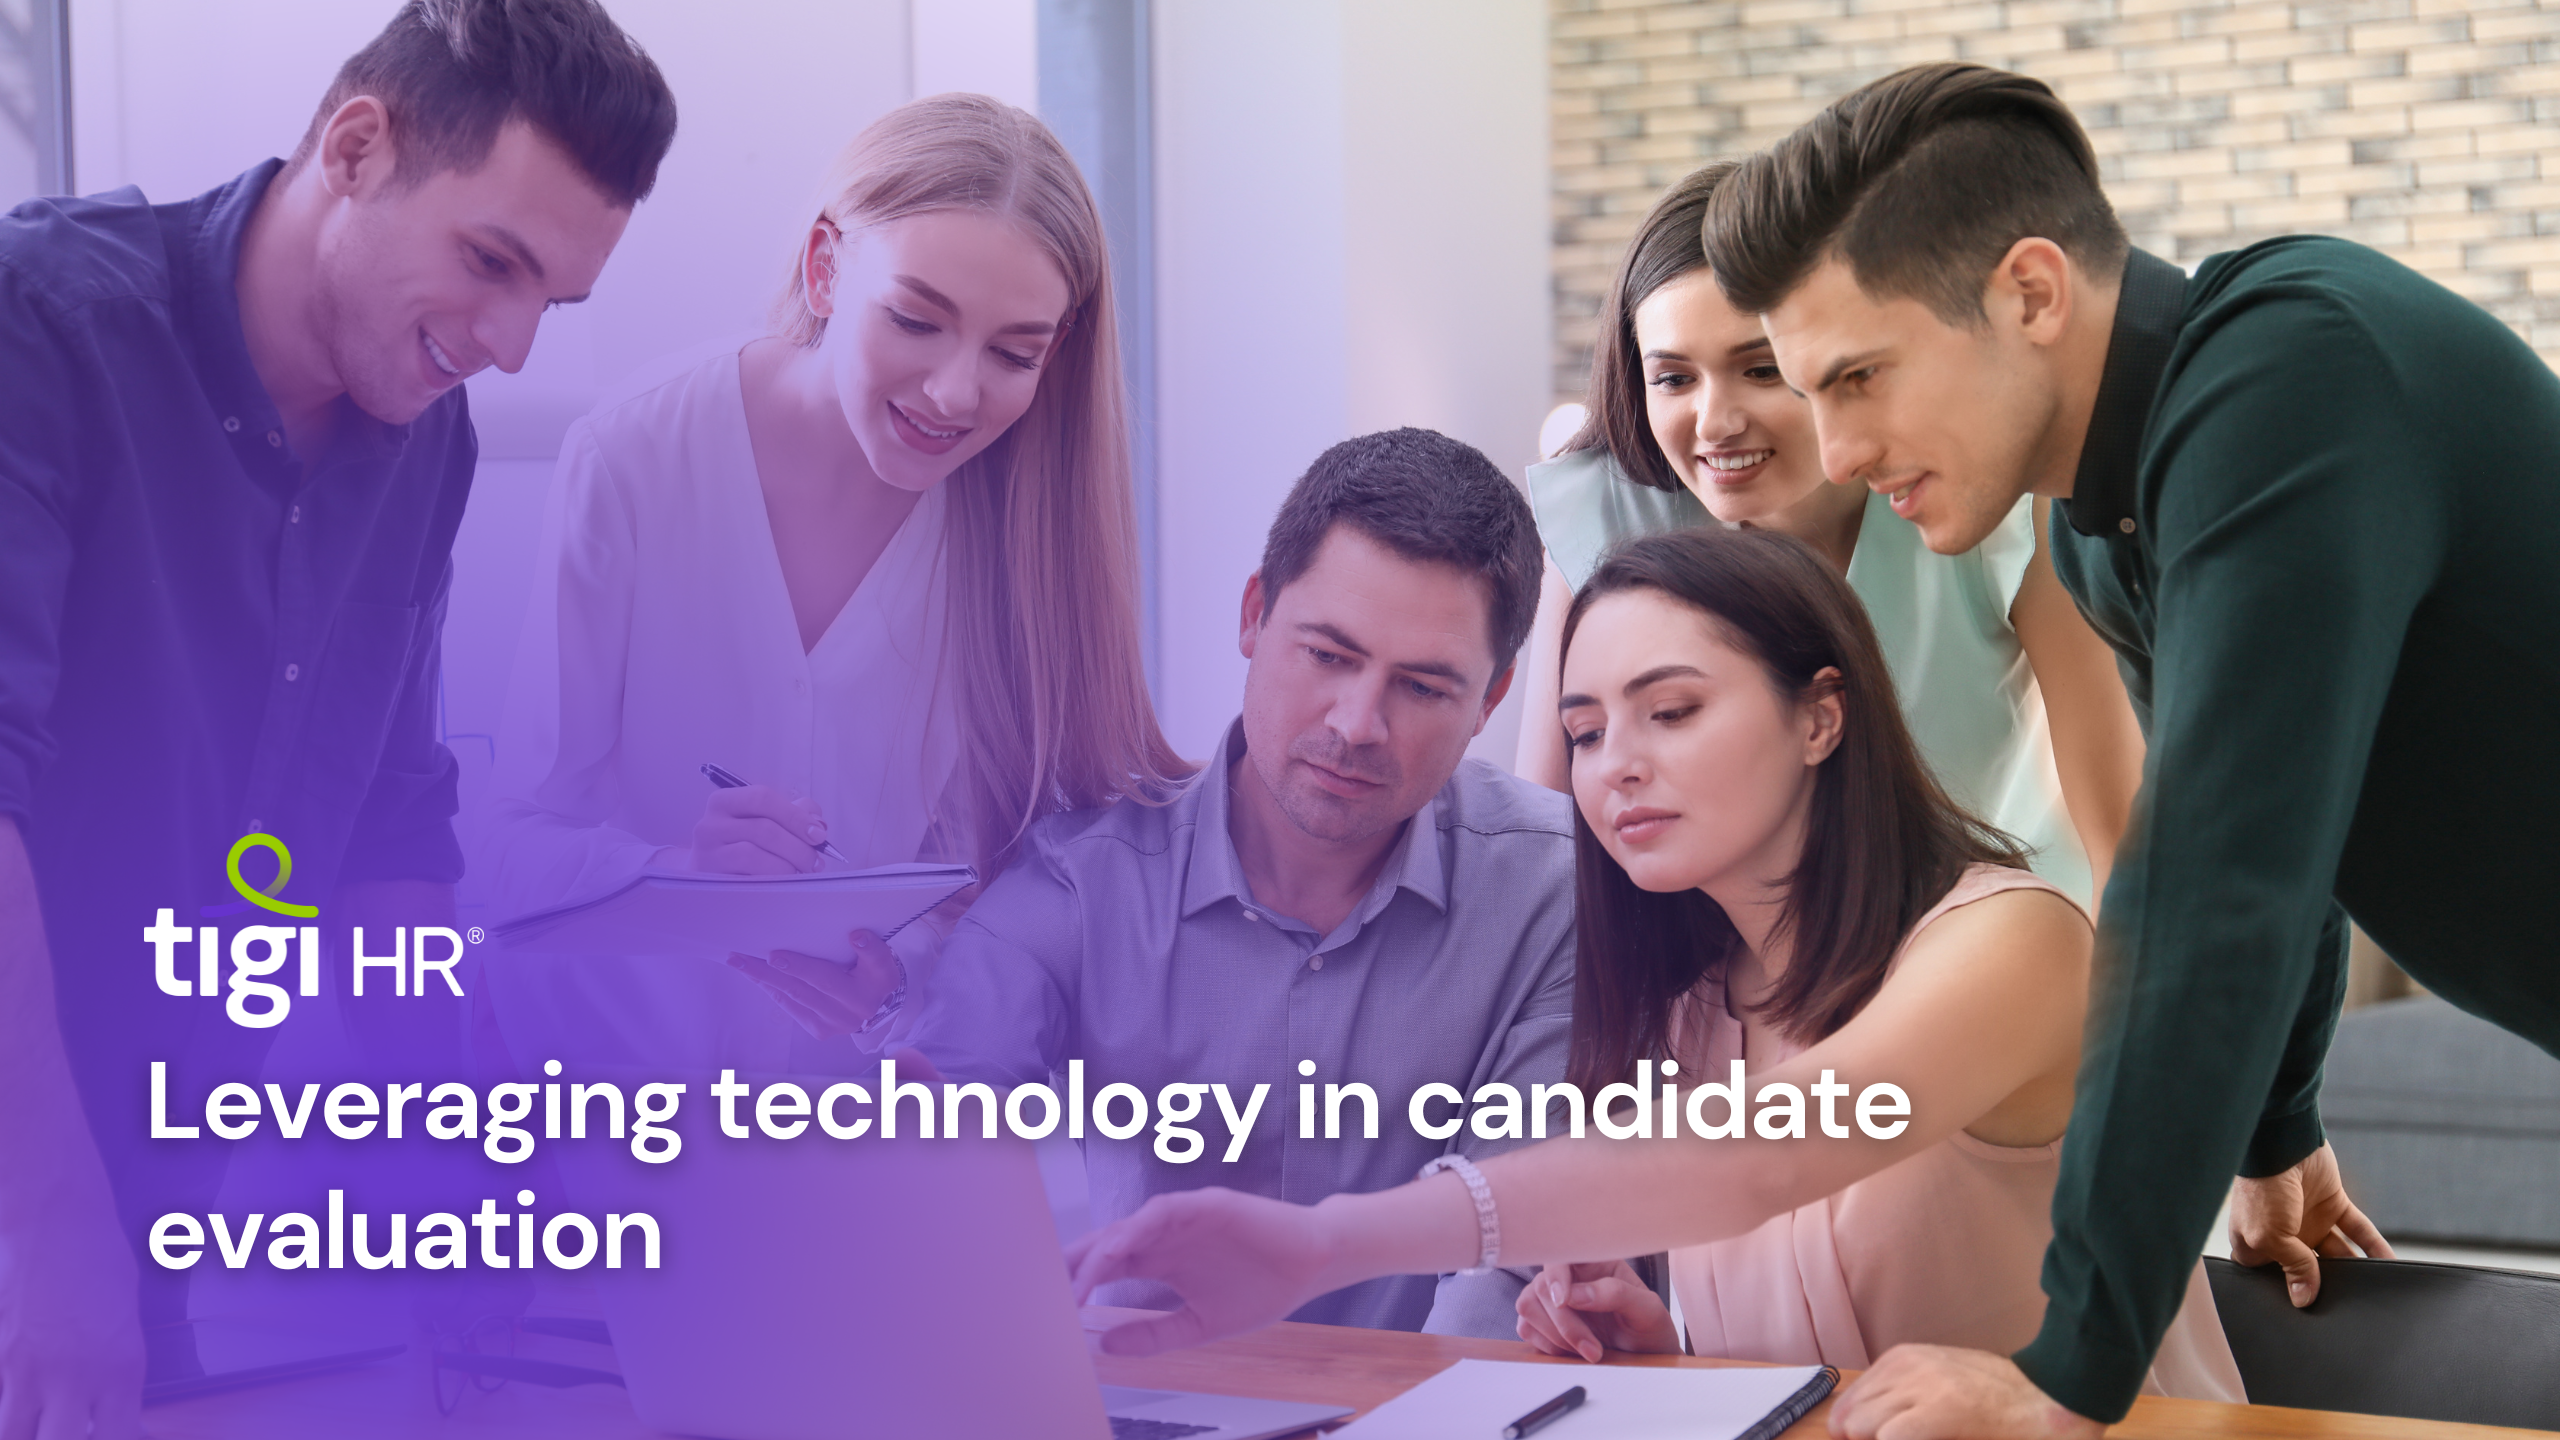 Leveraging technology in candidate evaluation. Find jobs at TIGI HR.